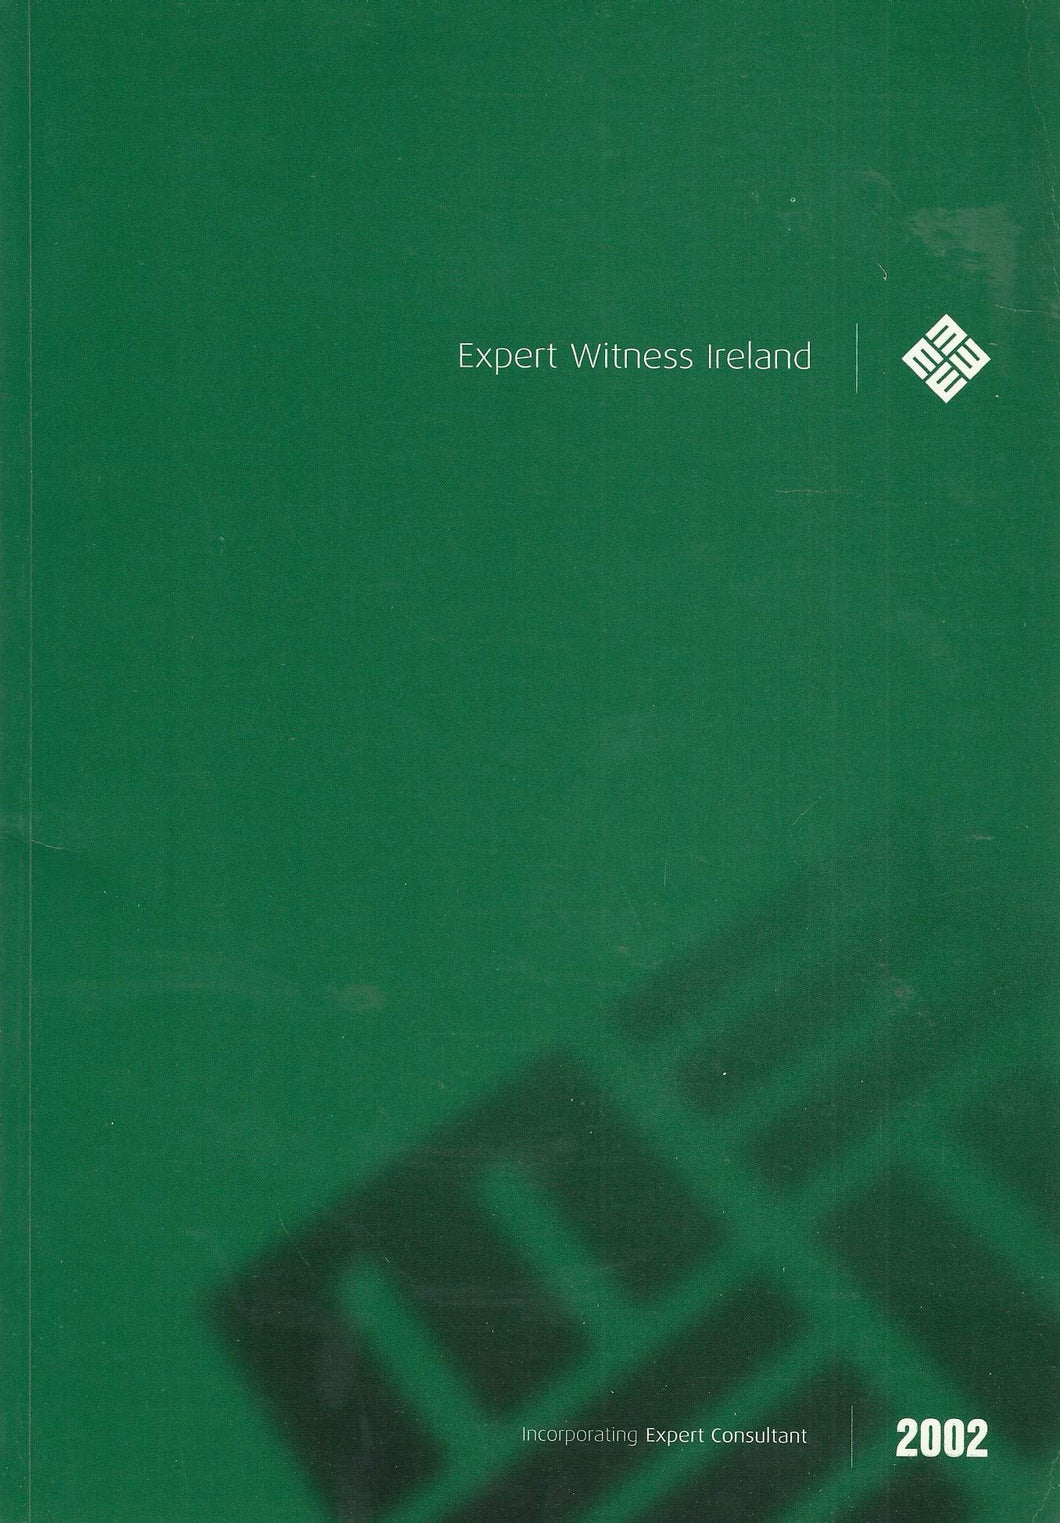 Expert Witness Ireland 2002 - Incorporating Expert Consultant